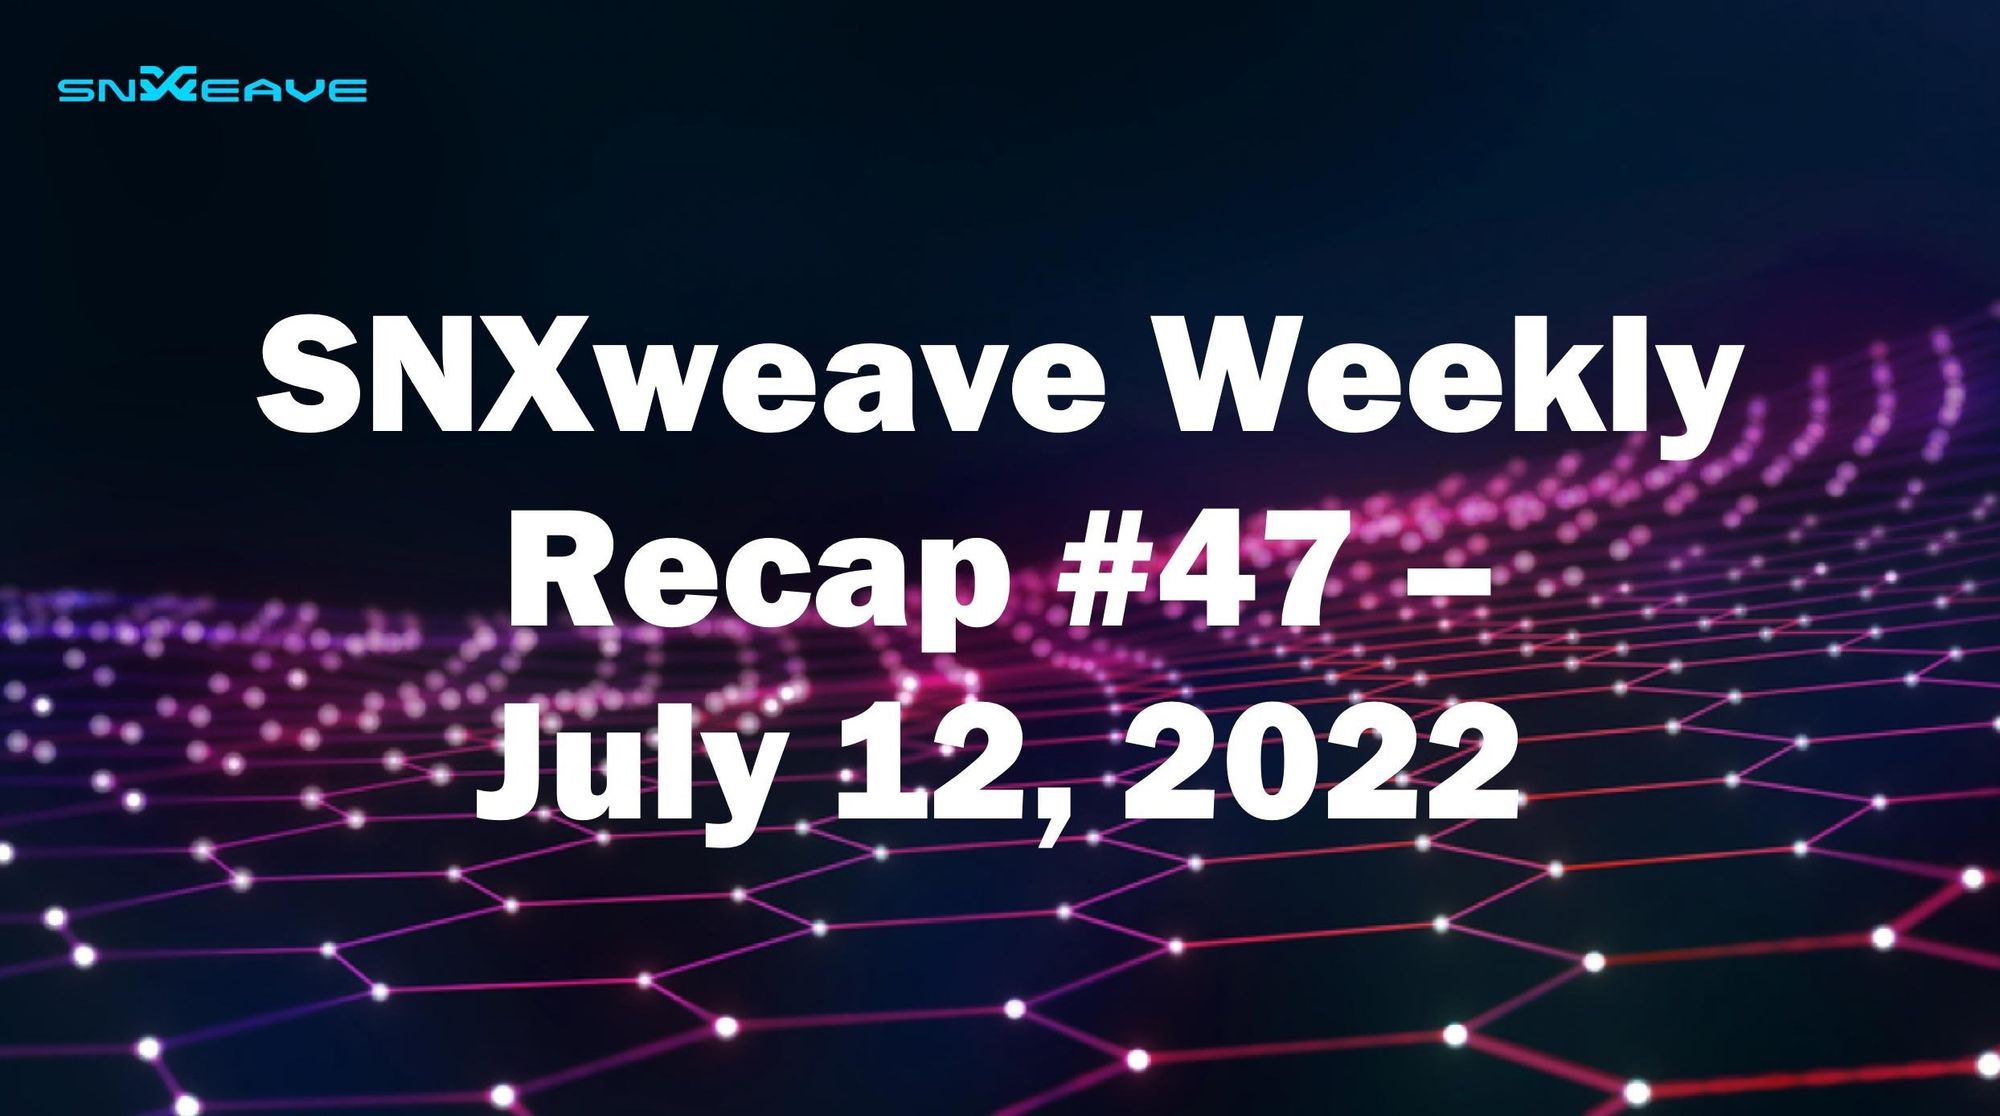 SNXweave Weekly Recap 47